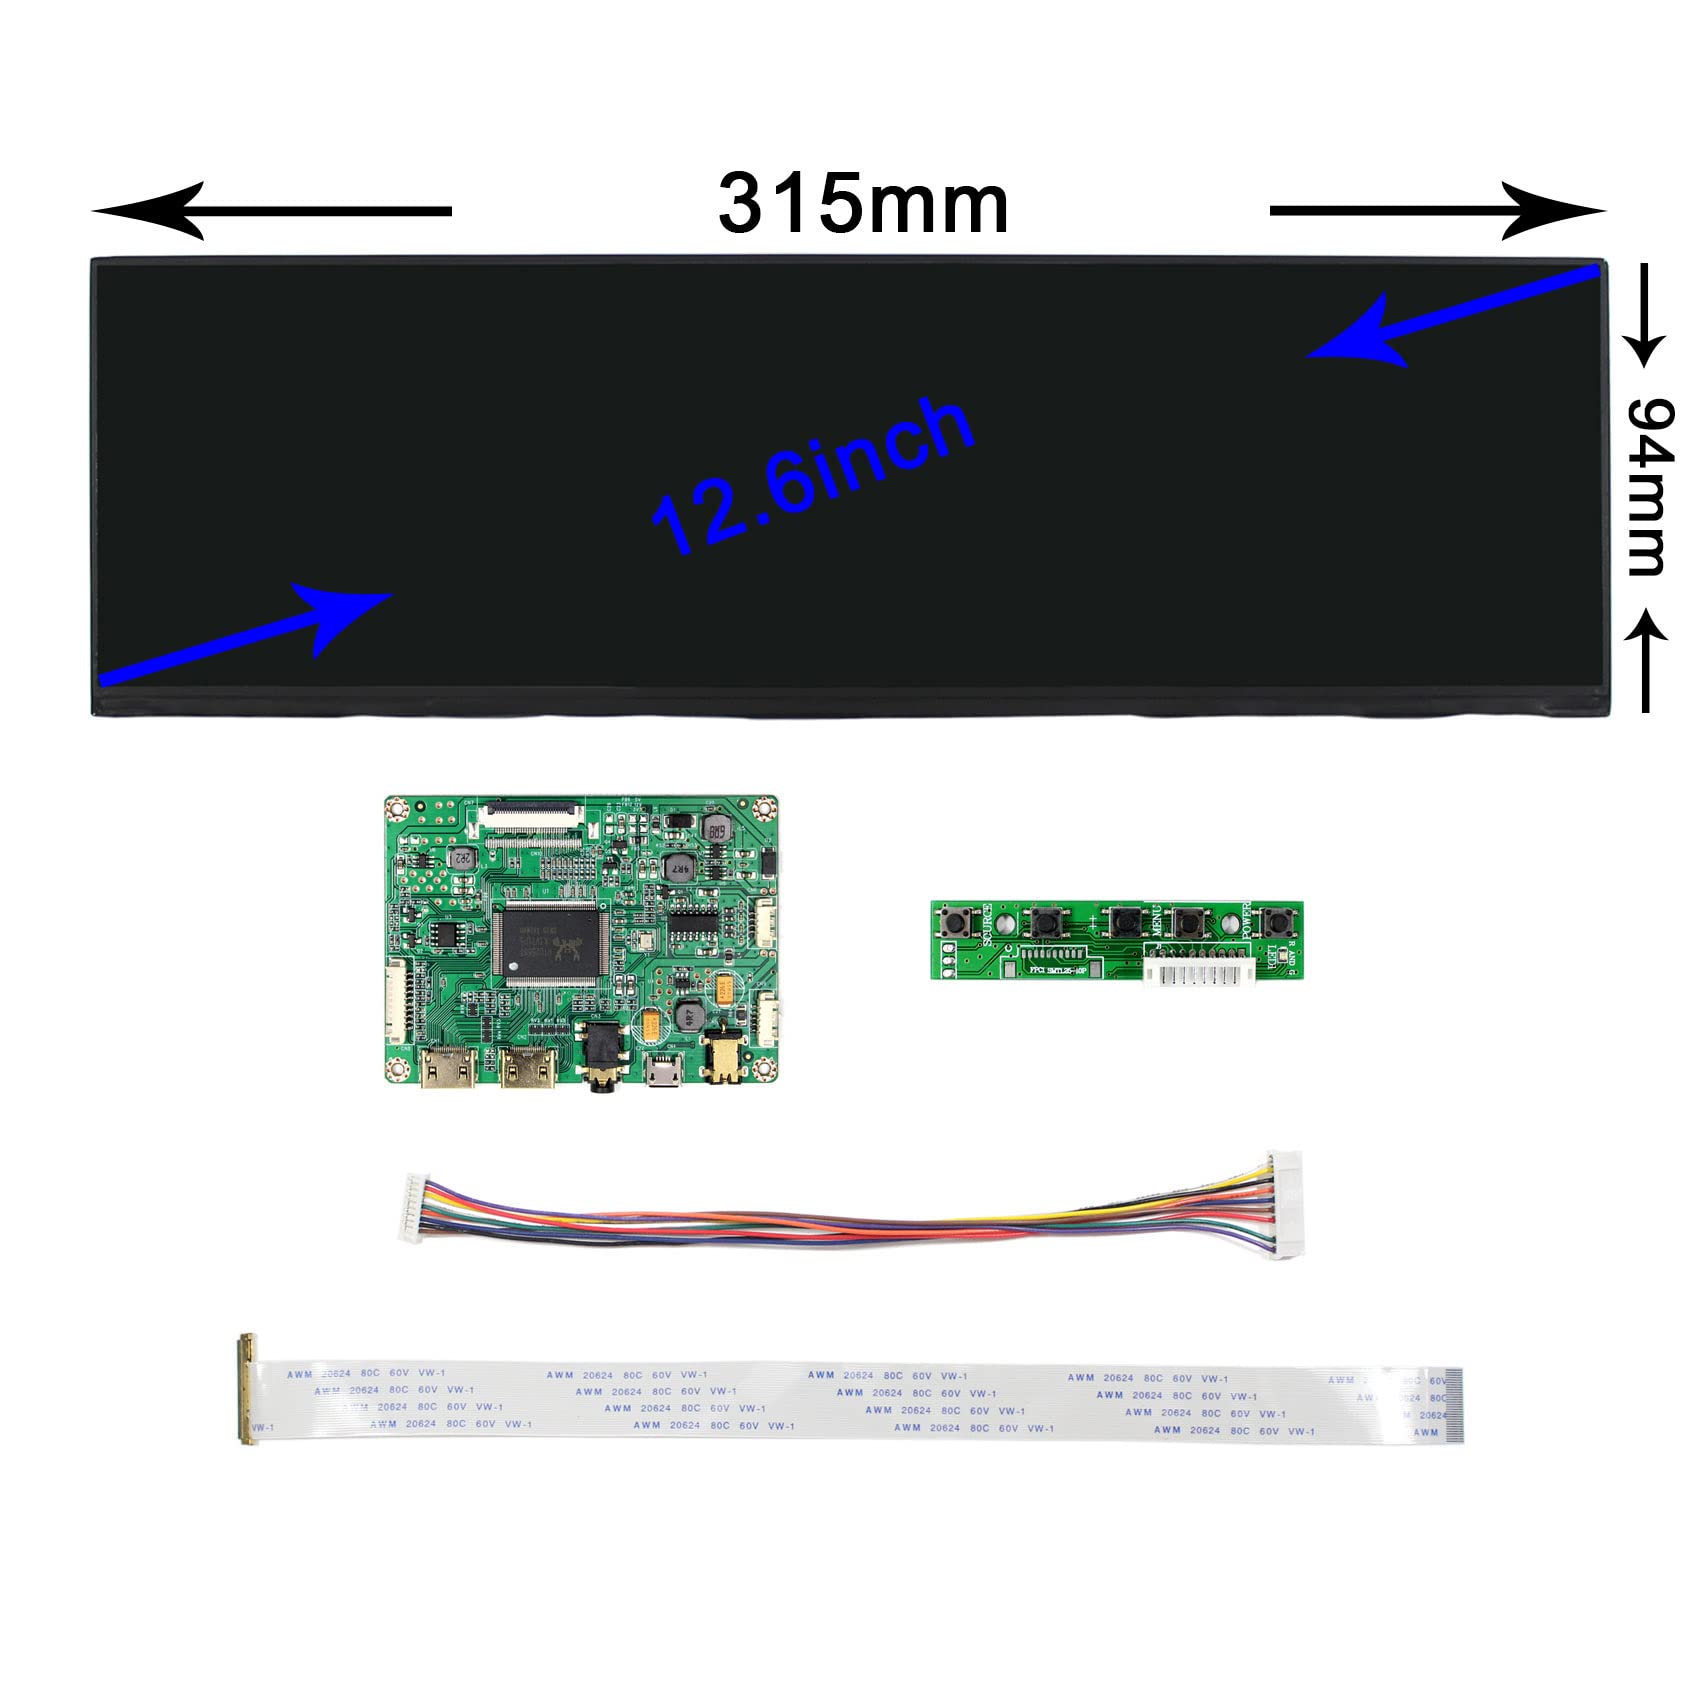 12.6 inch 1920x515 eDP IPS LCD Screen NV126B5M-N41 and 2Mini HDMI Micro USB LCD Controller Board,for DIY CPU GPU PC Computer Monitor Case